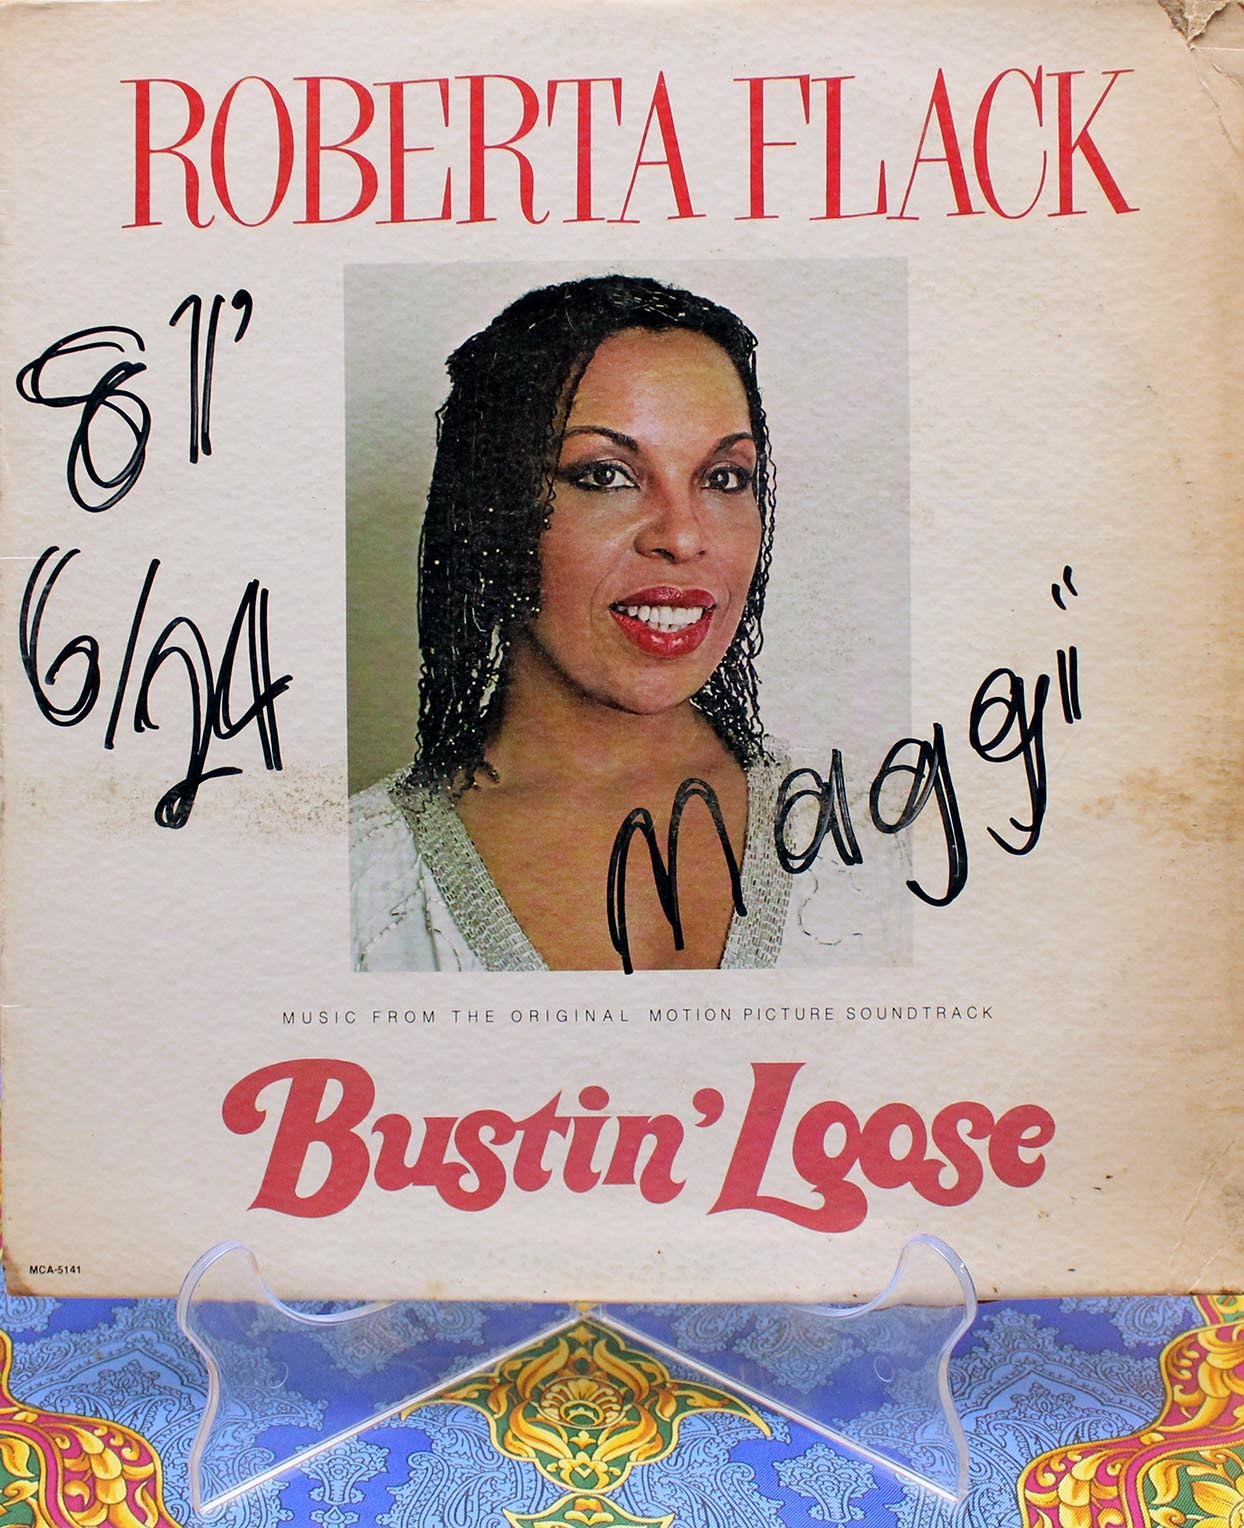 Roberta Flack Bustin loose 01